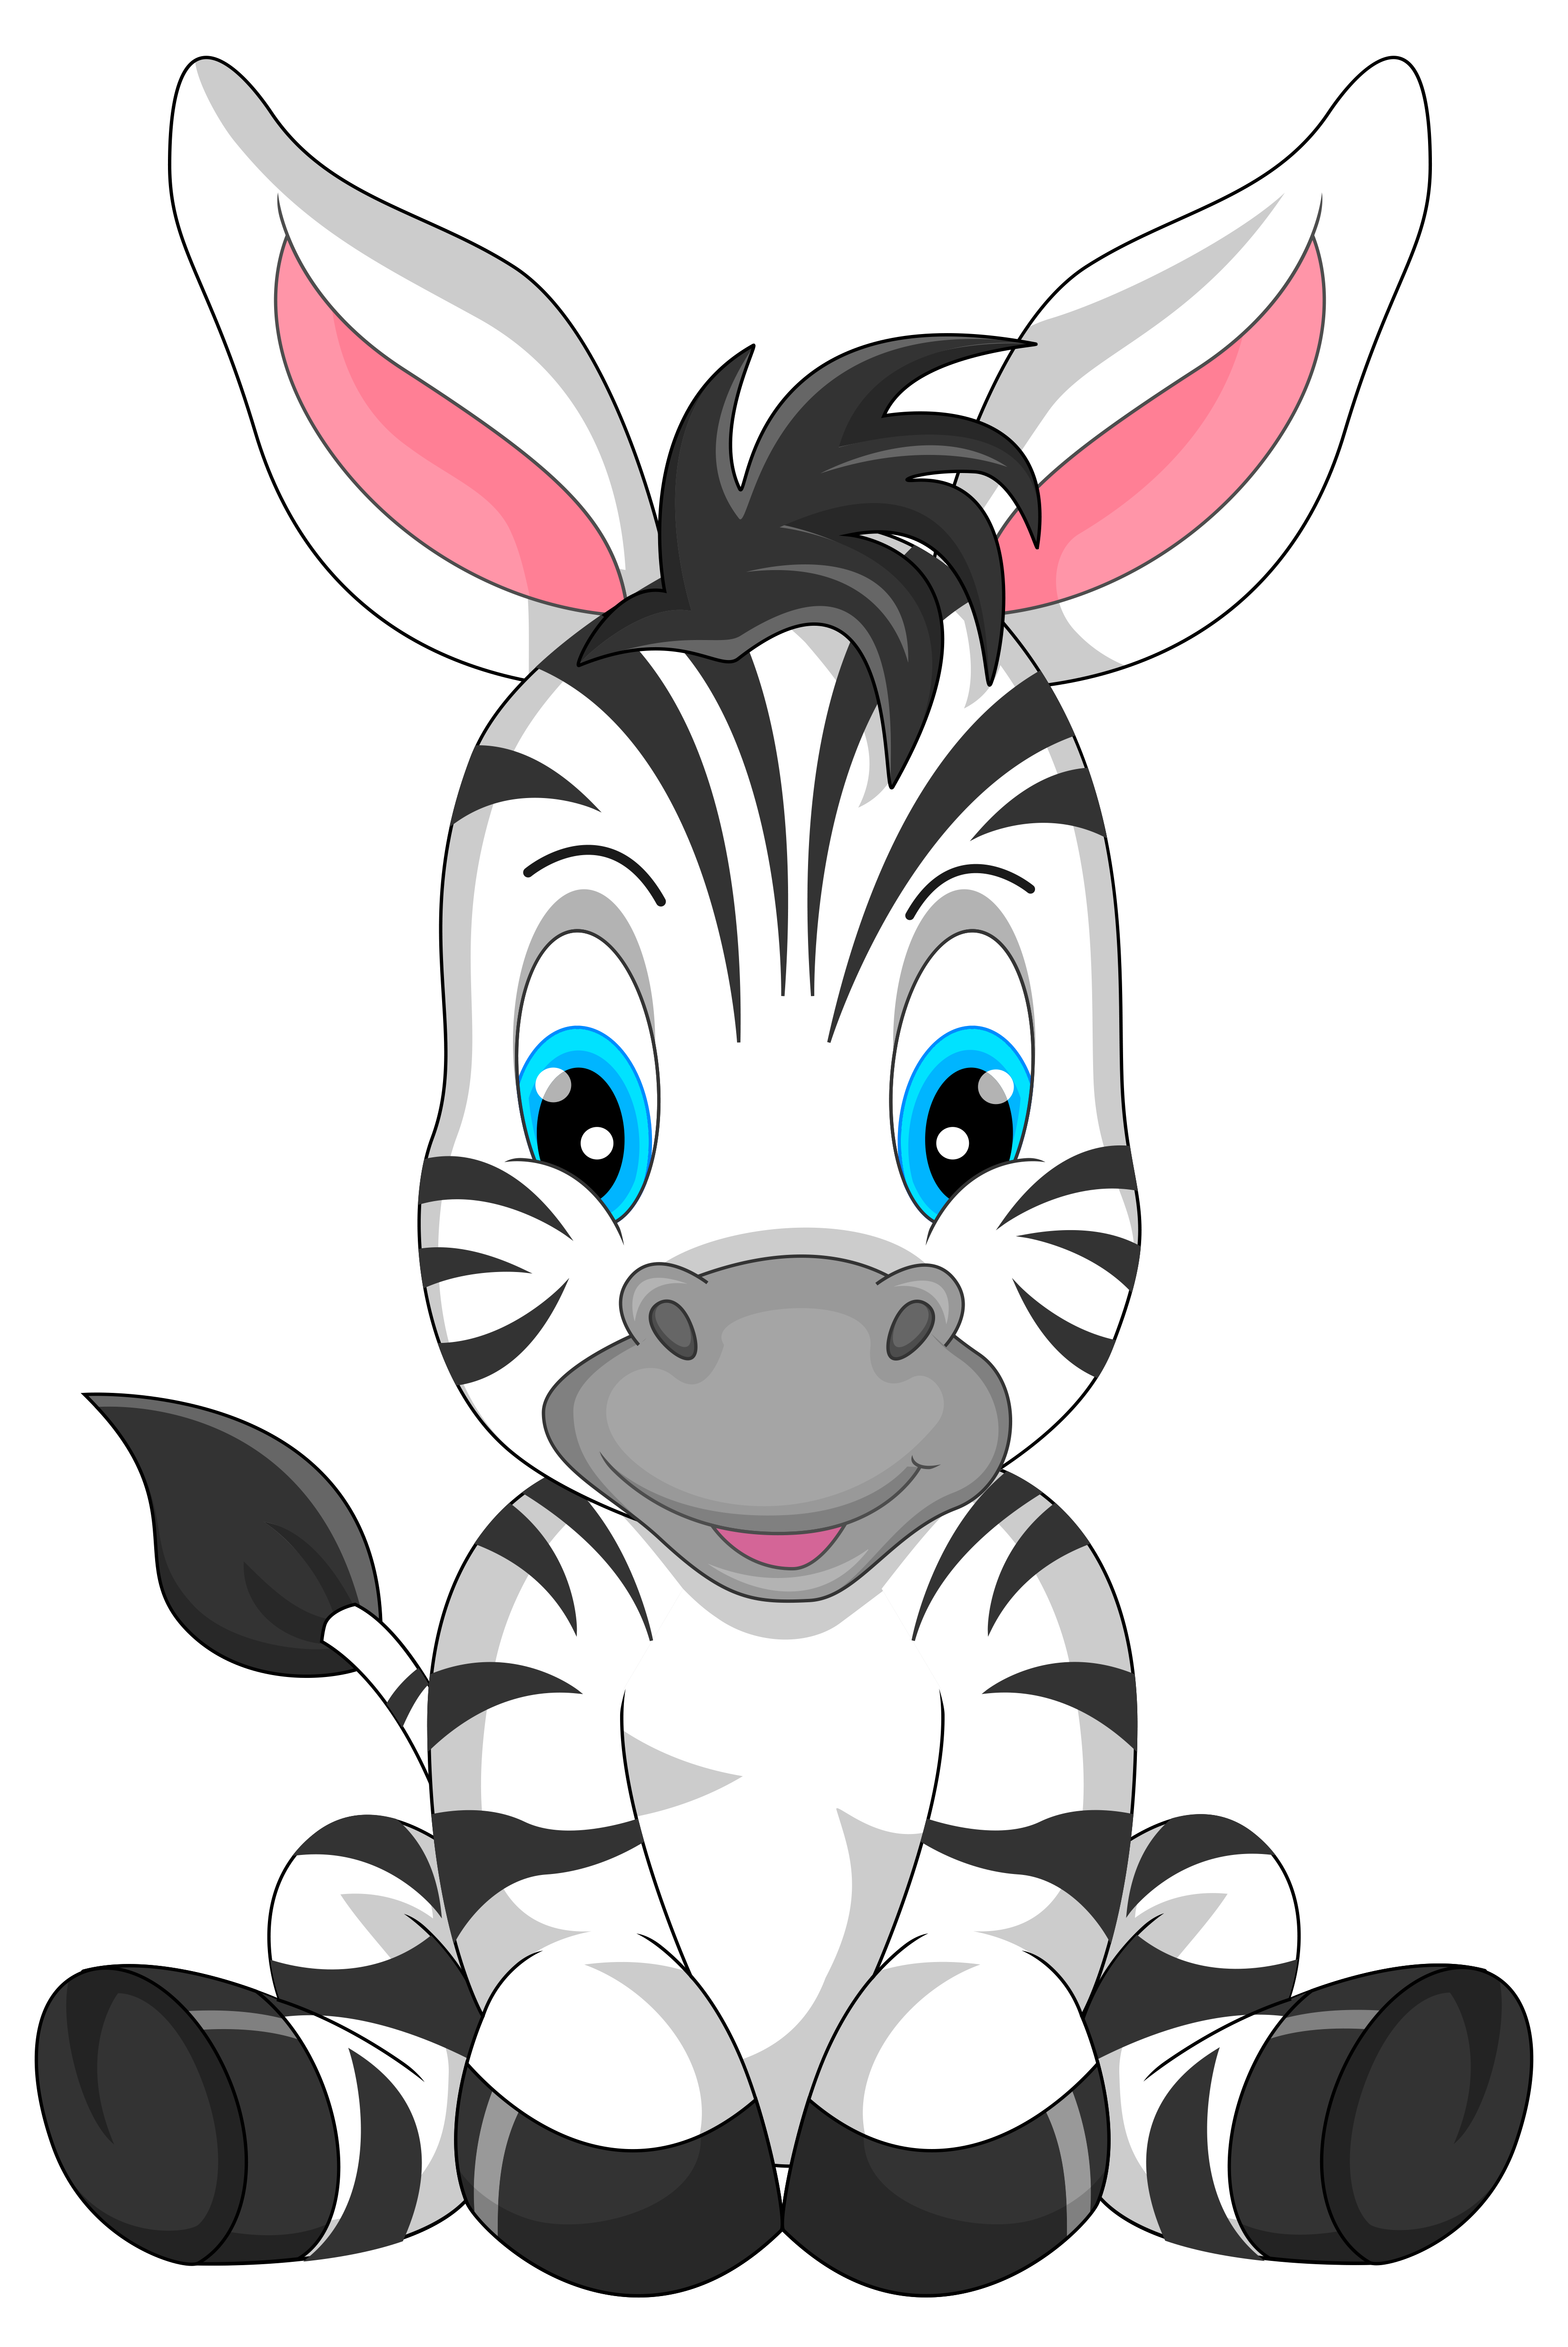 Cute Zebra Cartoon PNG Clipart Image